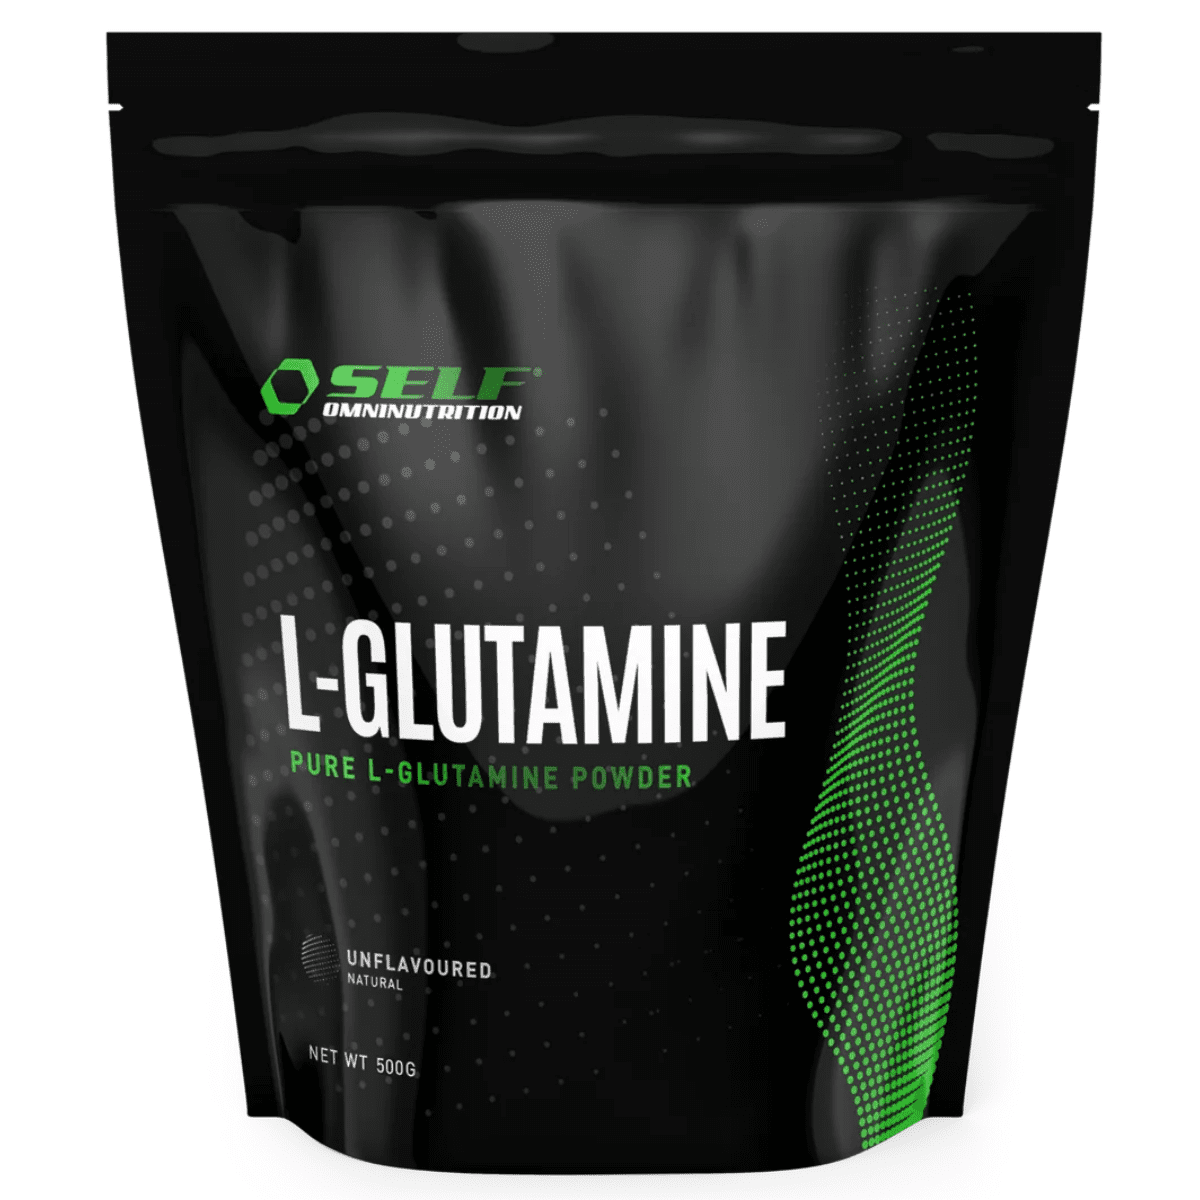 Self Omninutrition Real Glutamine - 1